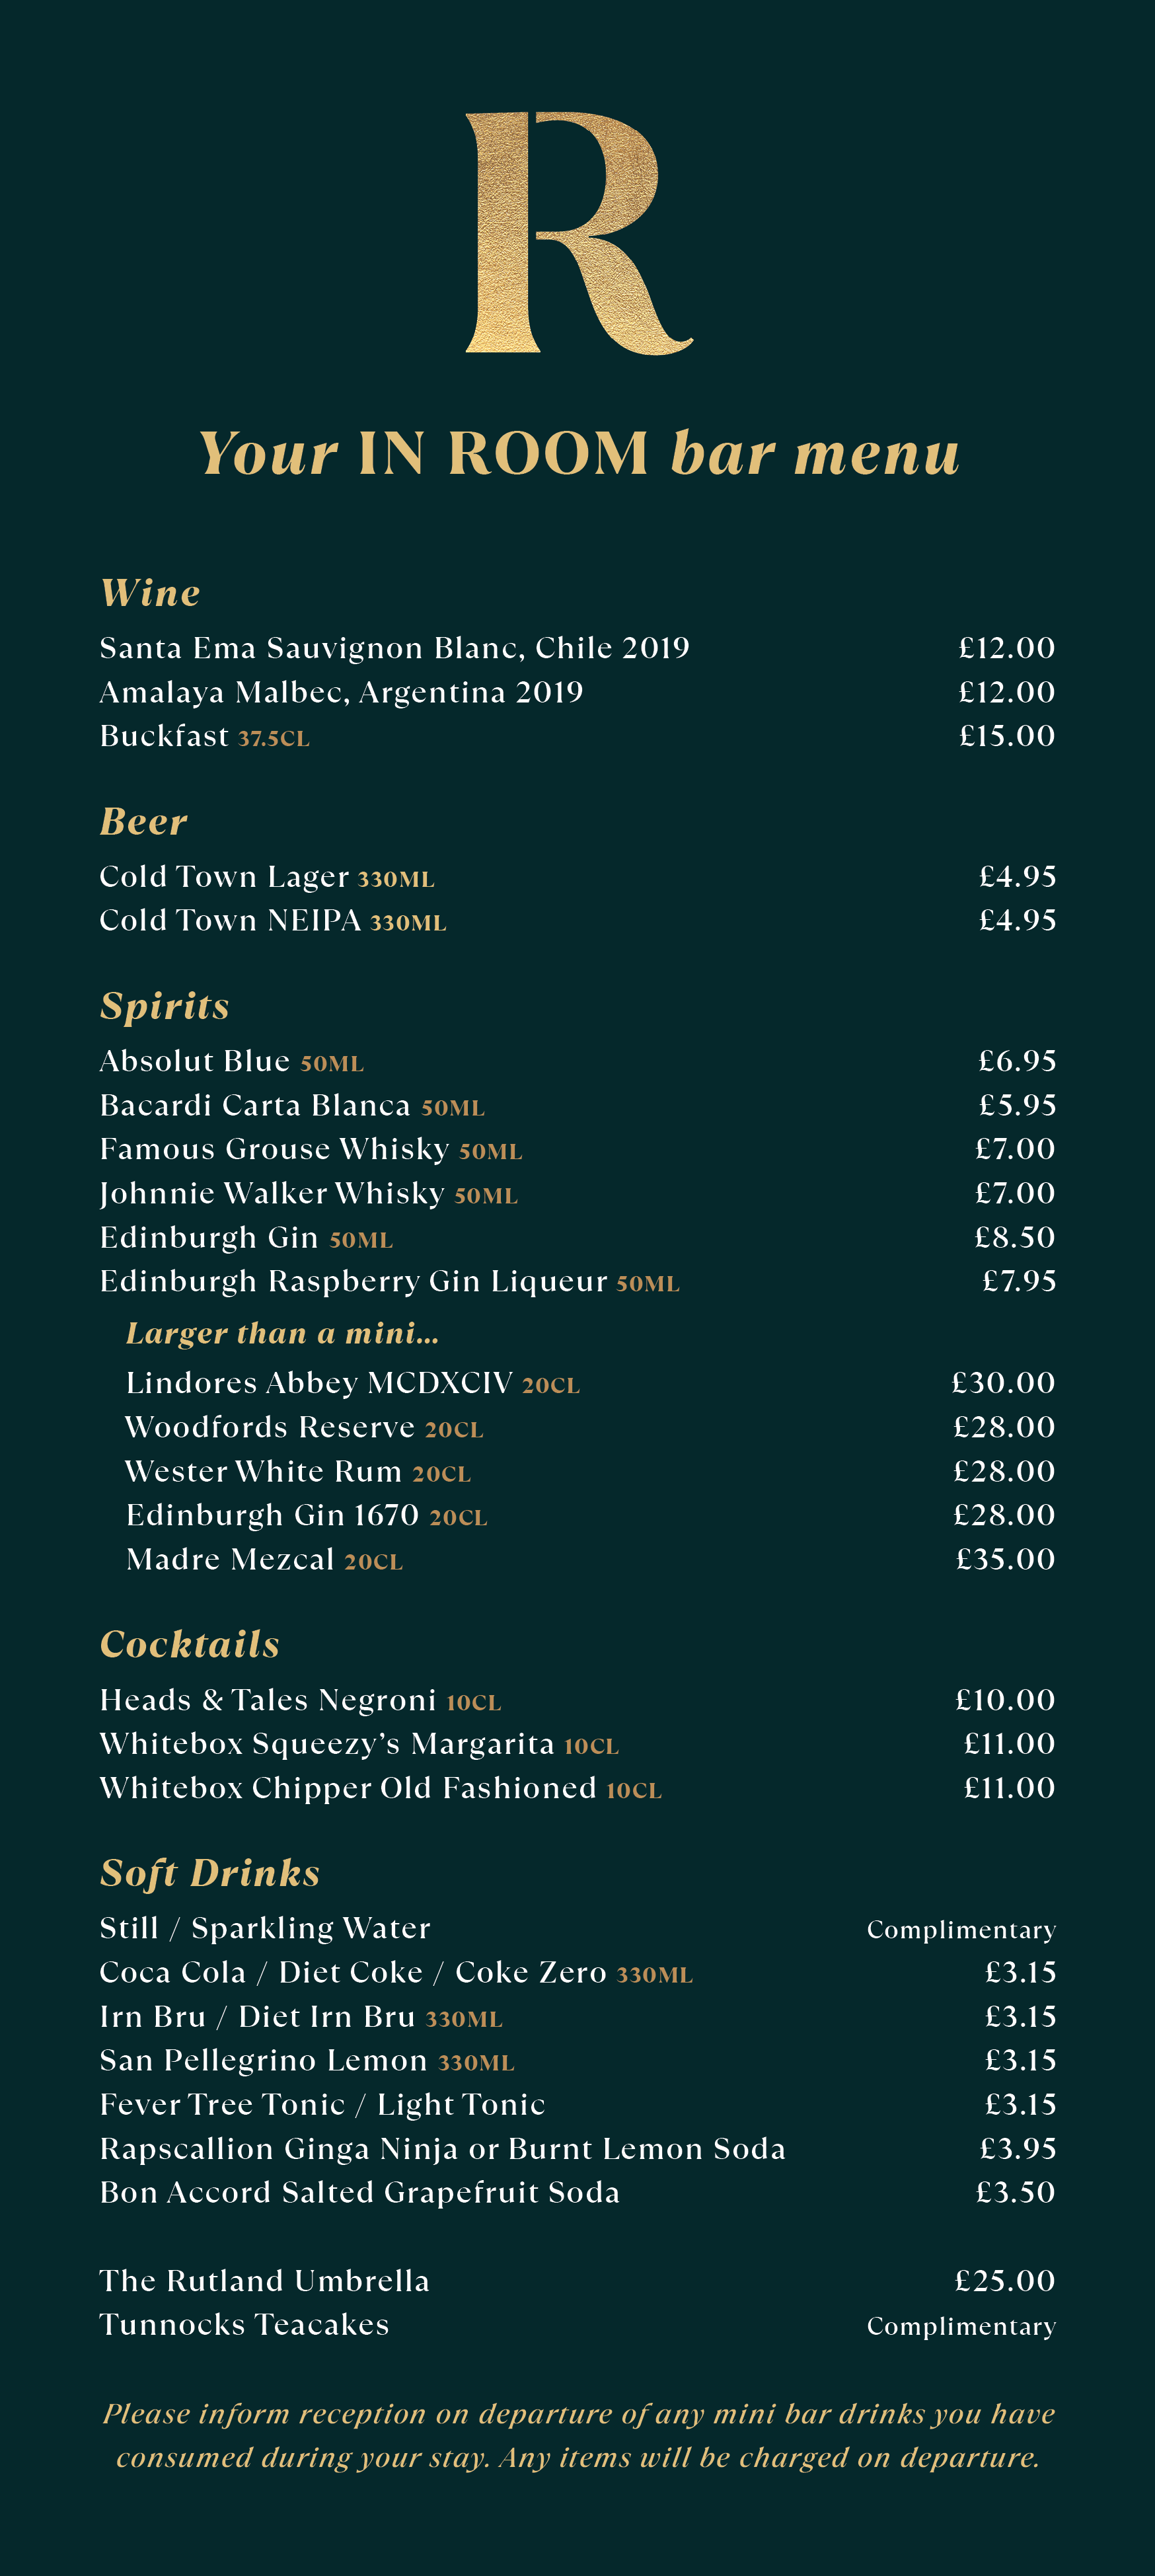 Mini Bar Price List